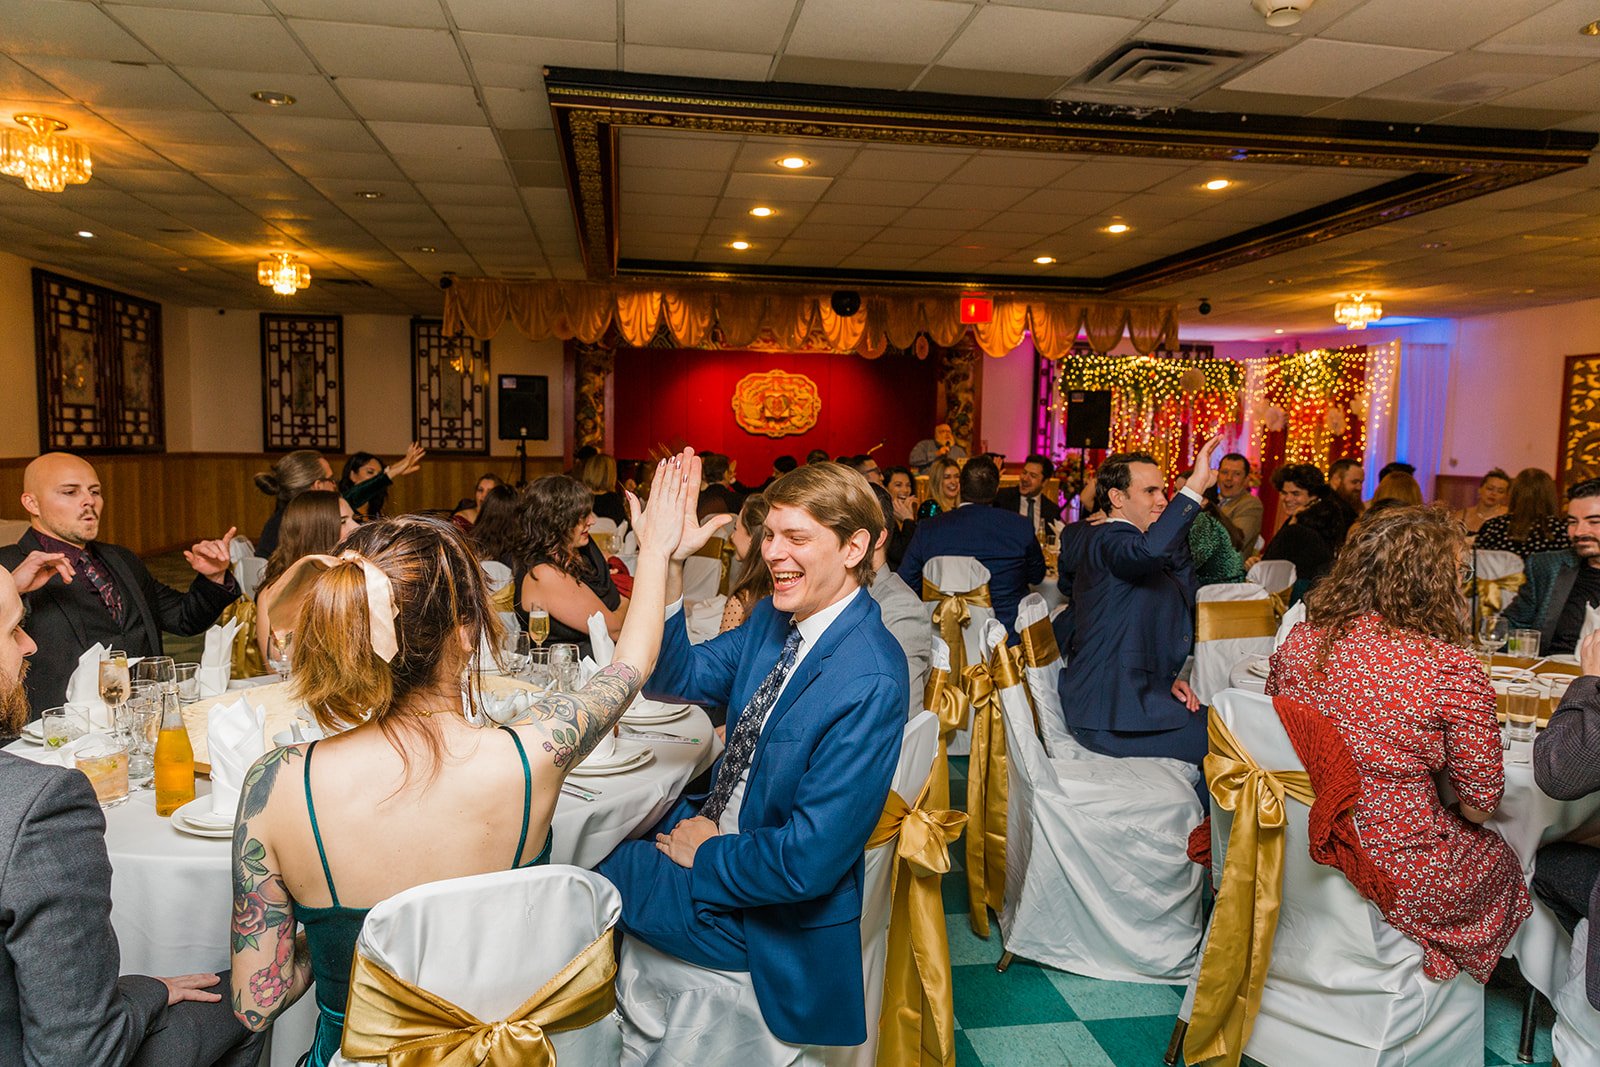  Wedding trivia nontraditional wedding reception at dim sum restaurant Furama in Chicago 